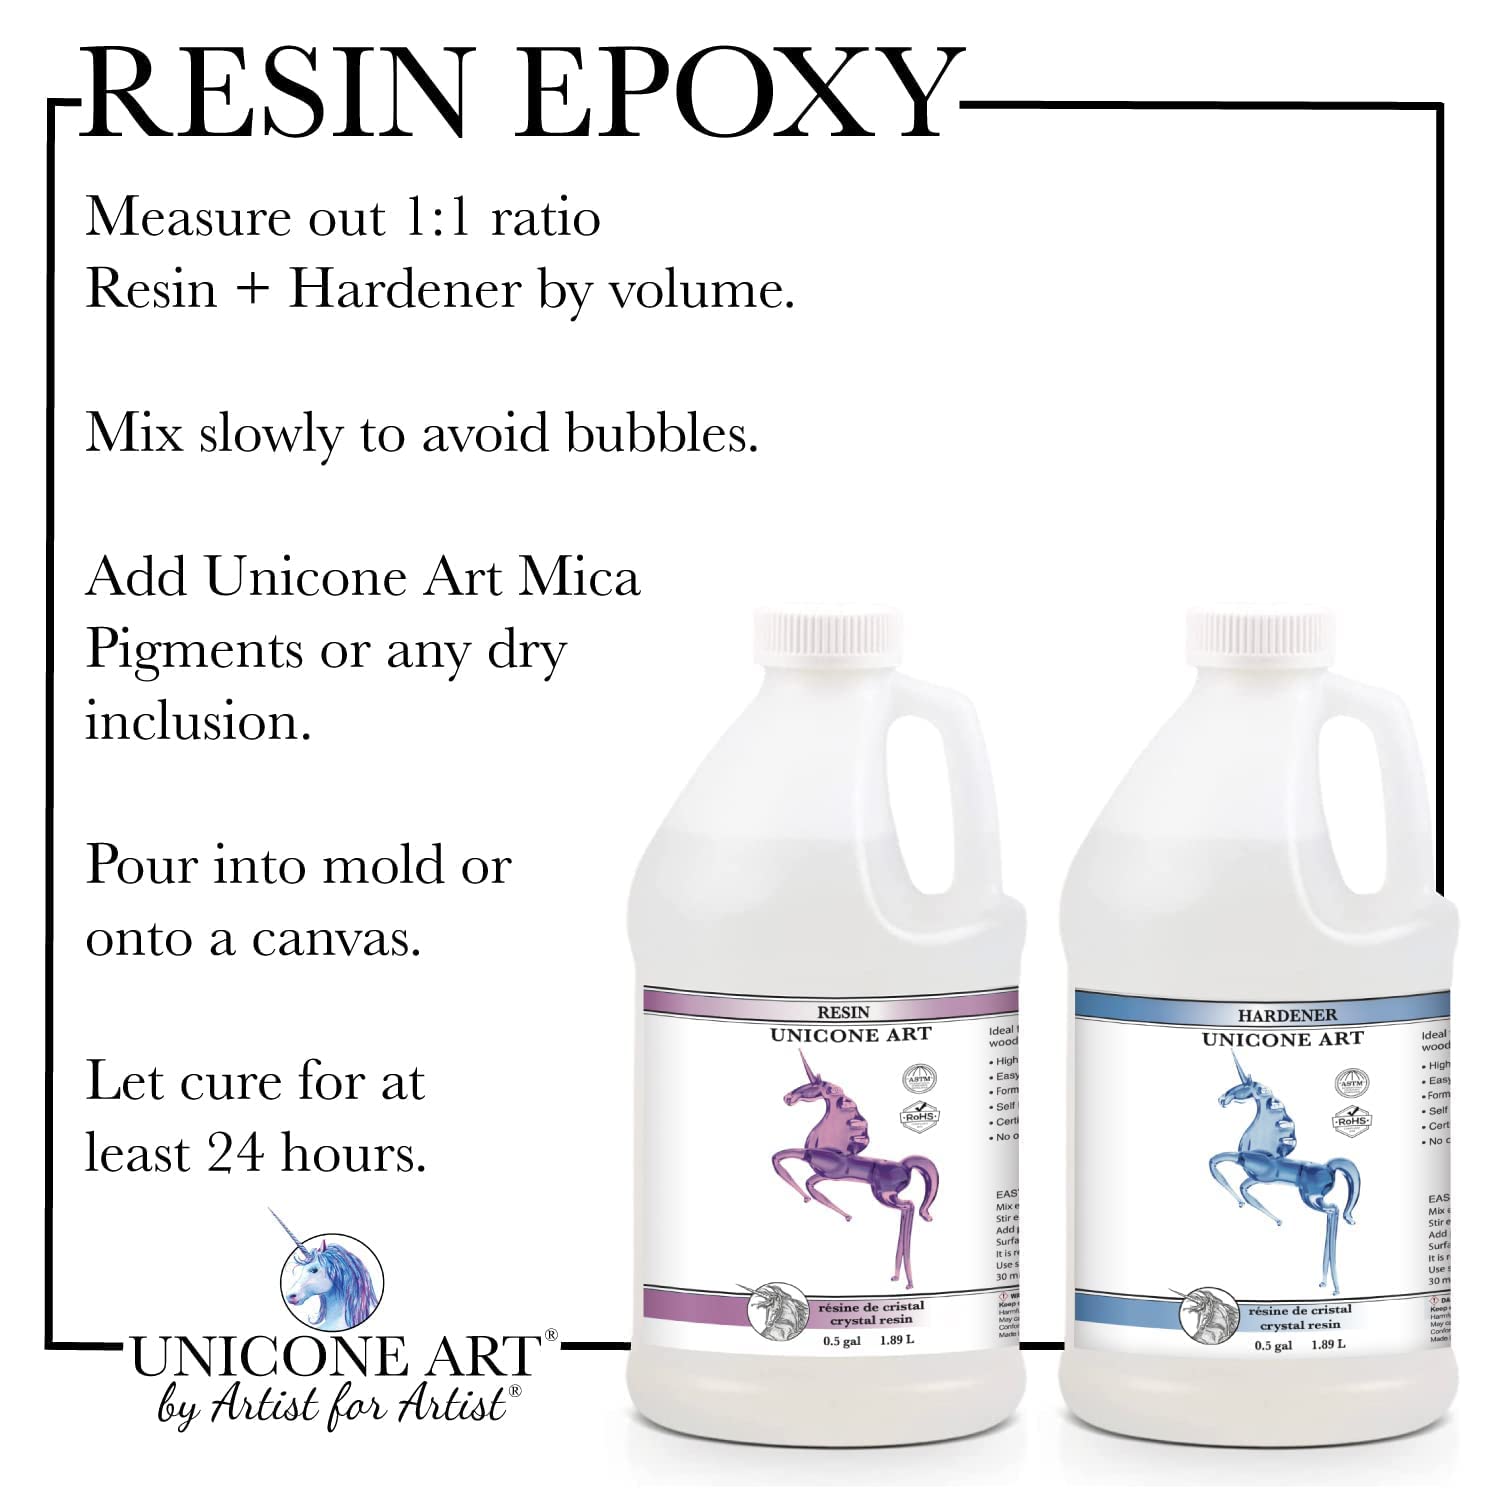 ArtResin 1 Gallon Clear Epoxy Resin & Hardener Kit